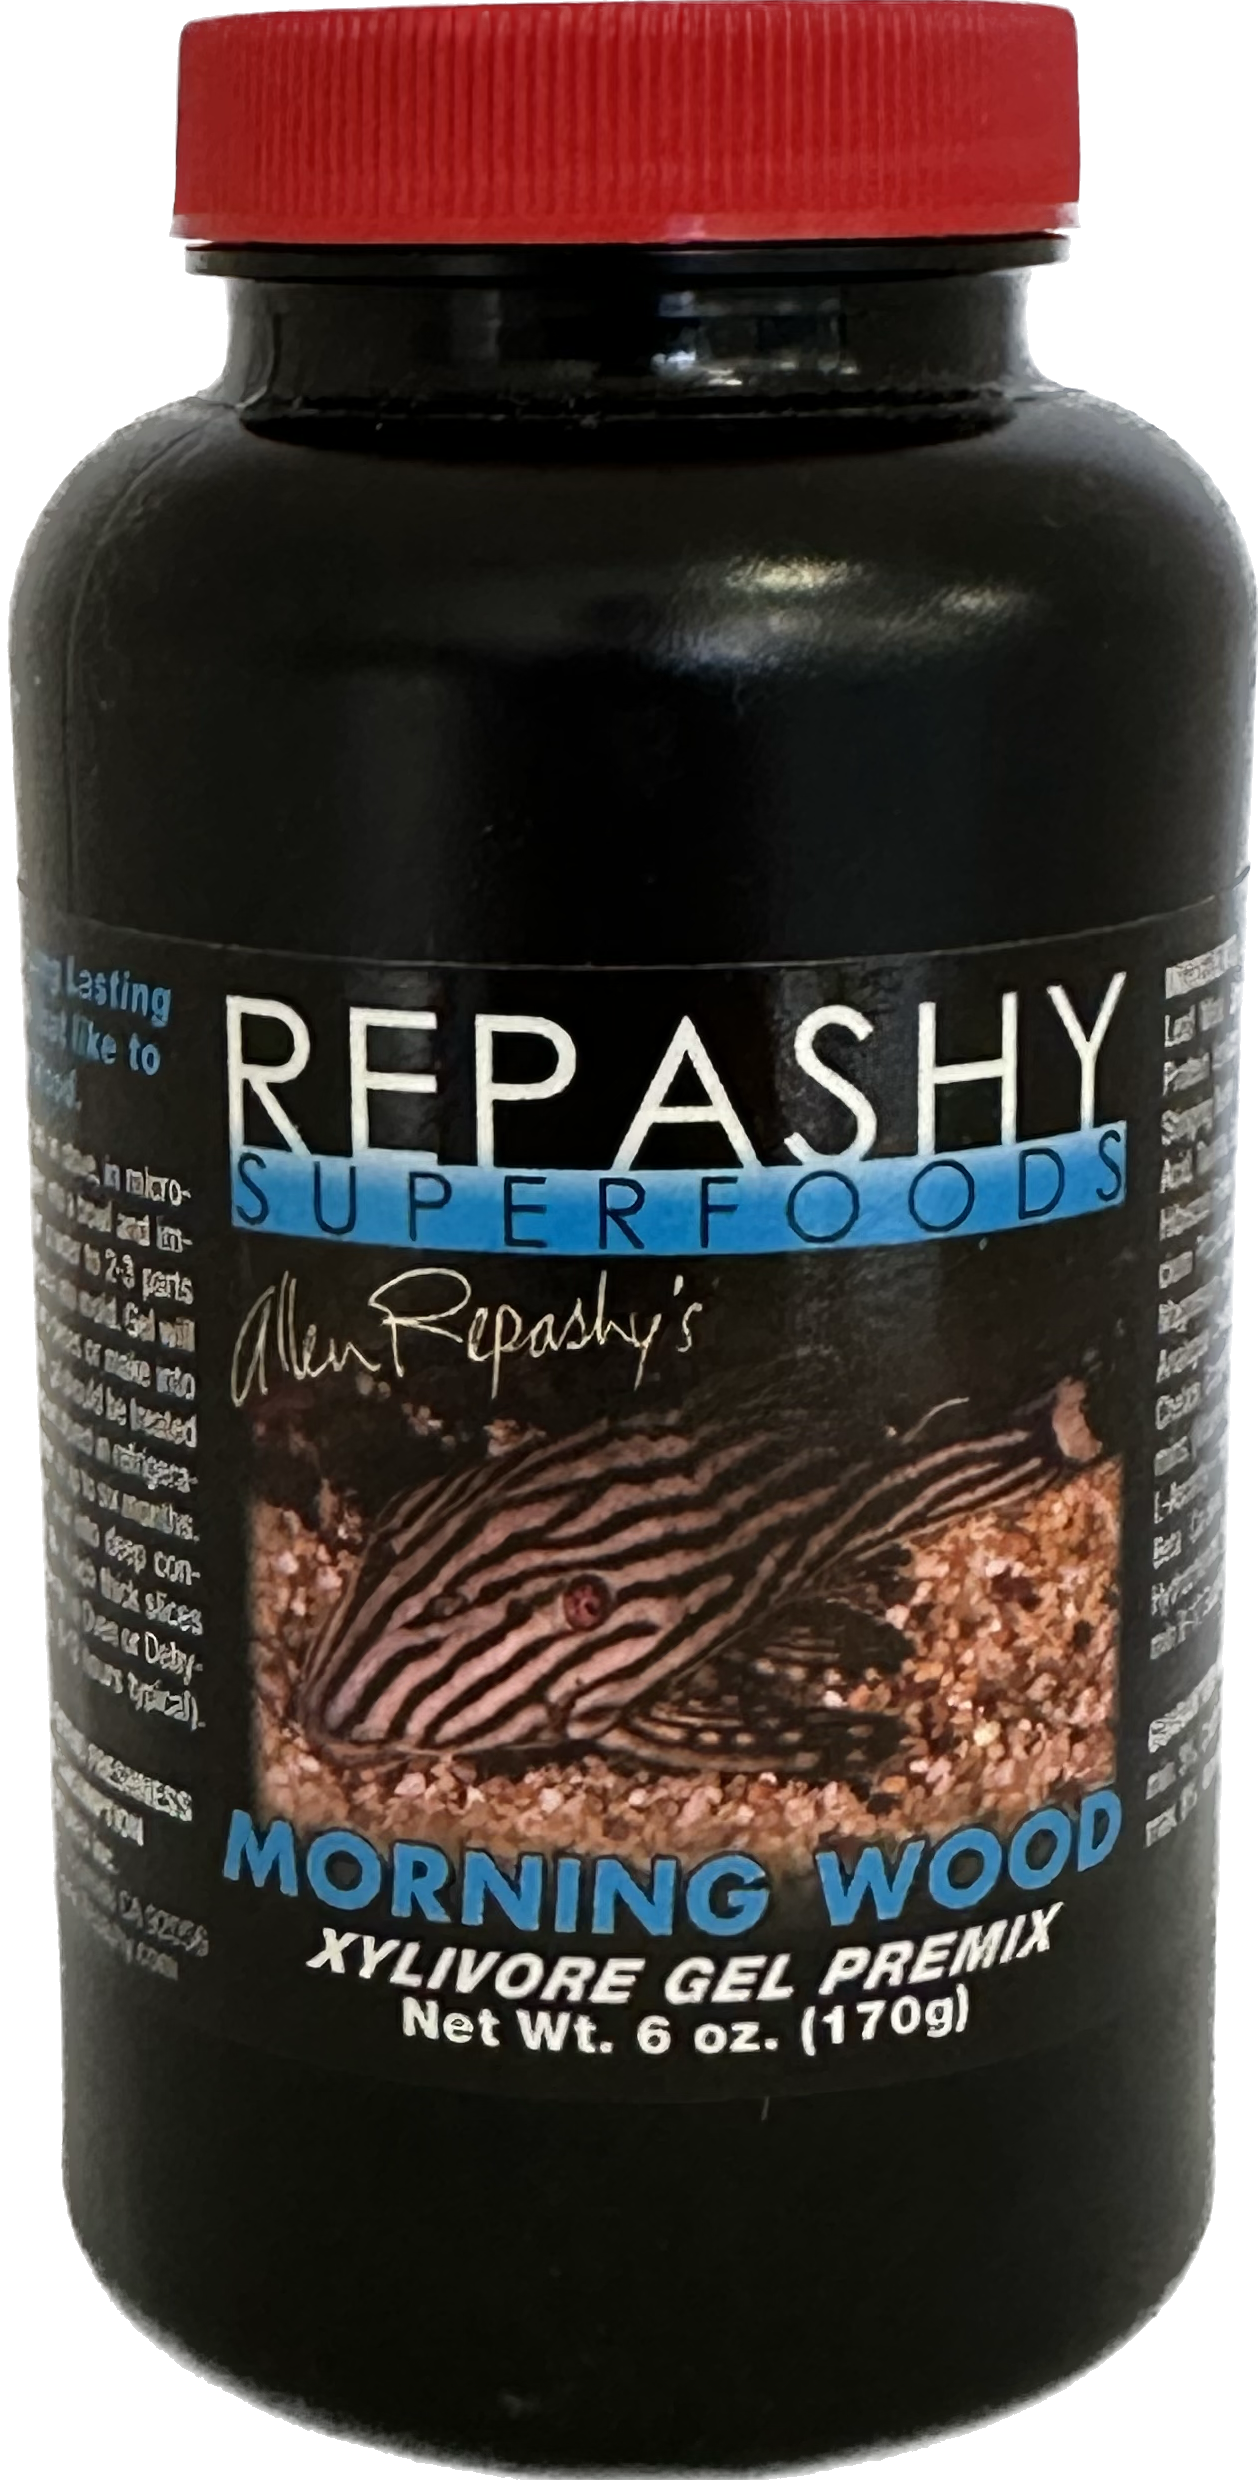 REPASHY SUPERFOODS (MORNING WOOD) 6oz.